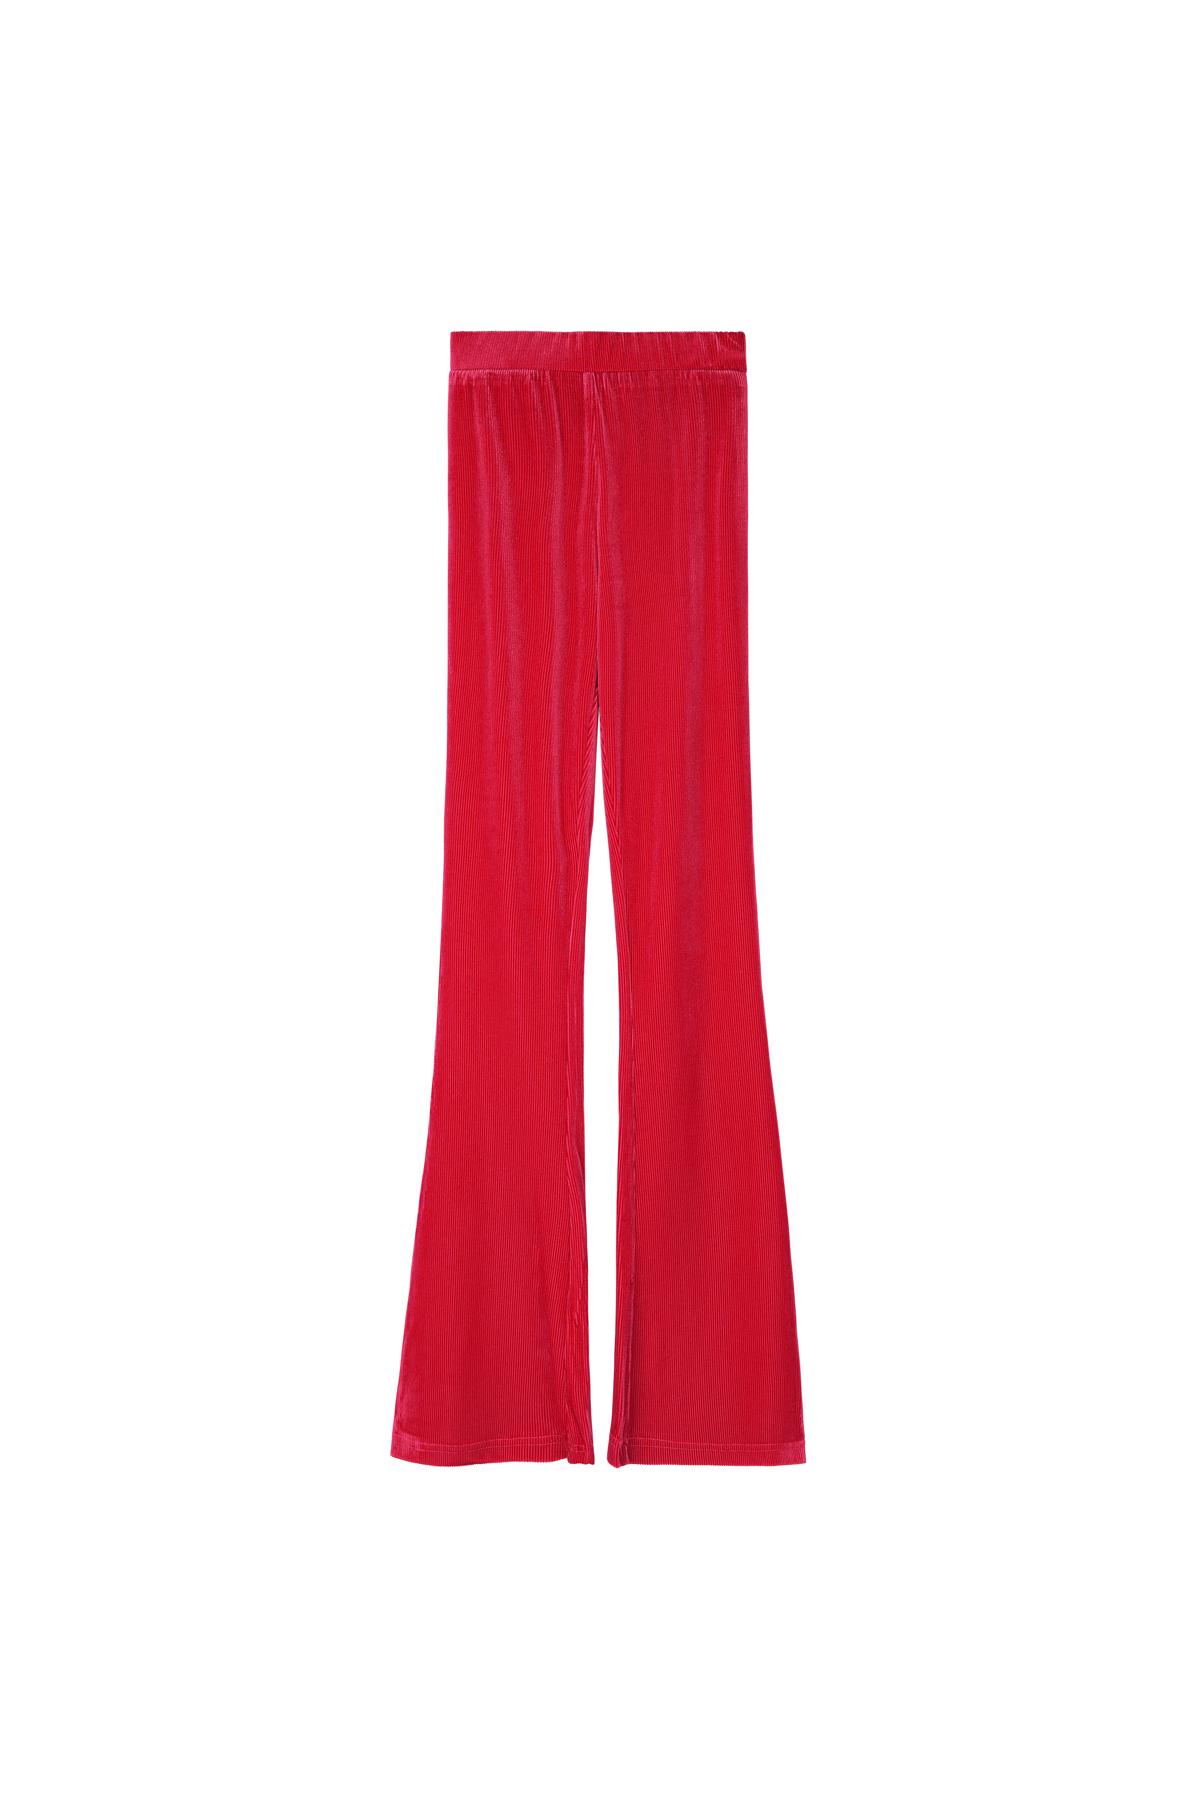 Red / S / pantolon asır Red S 